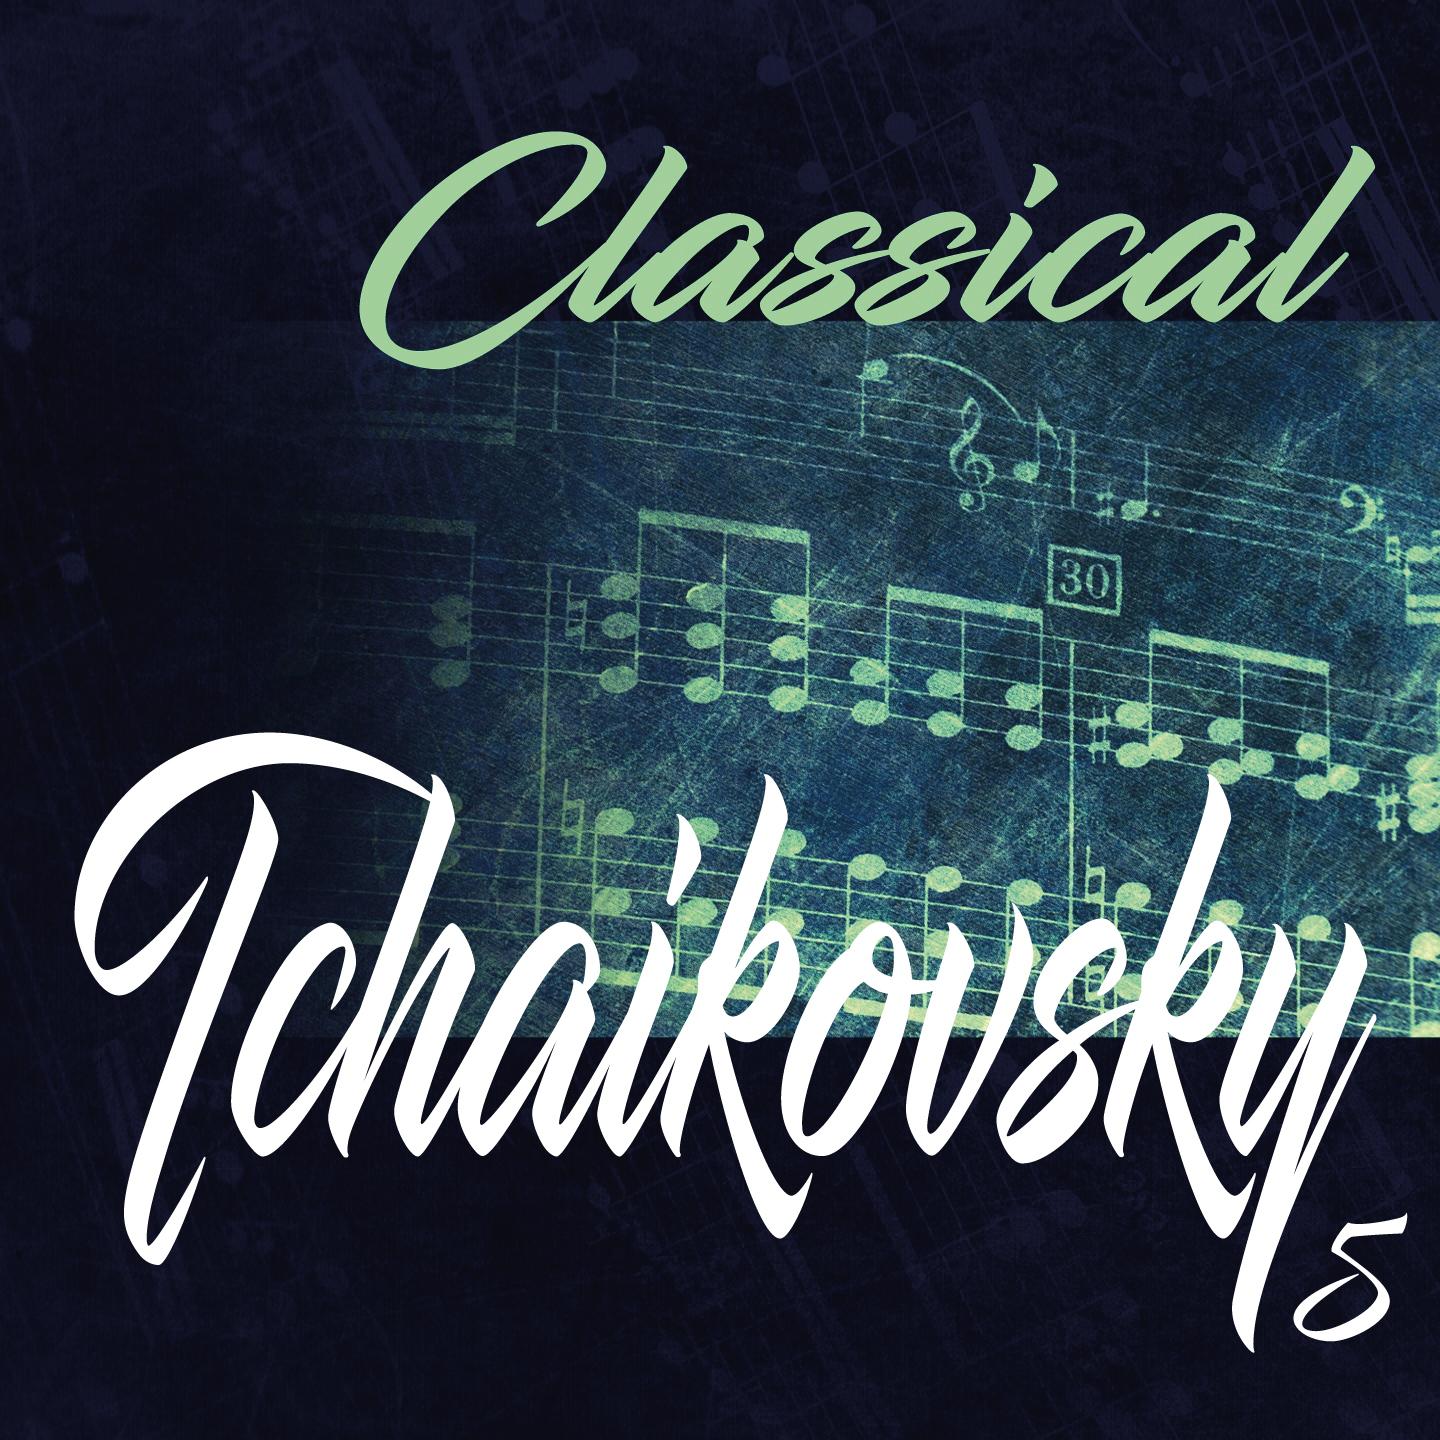 Classical Tchaikovsky 5